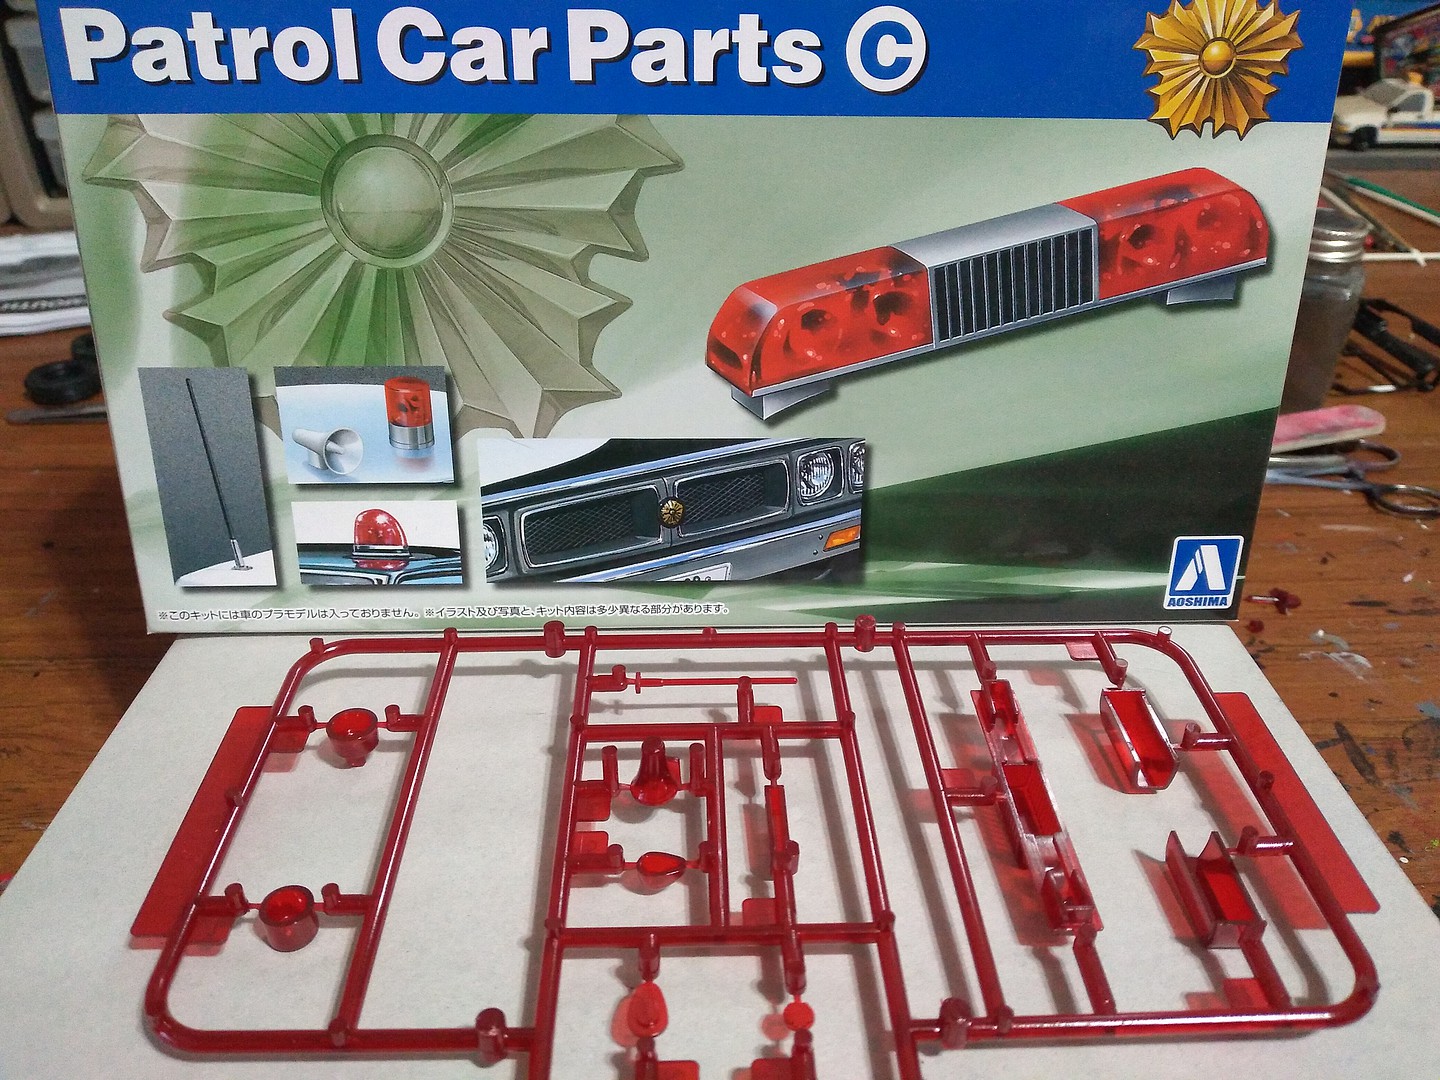 Plastic Model Building Kit # 59746 Aoshima 1/24 Scale Light Bar The Tuned Parts Series Patrol Car Parts A